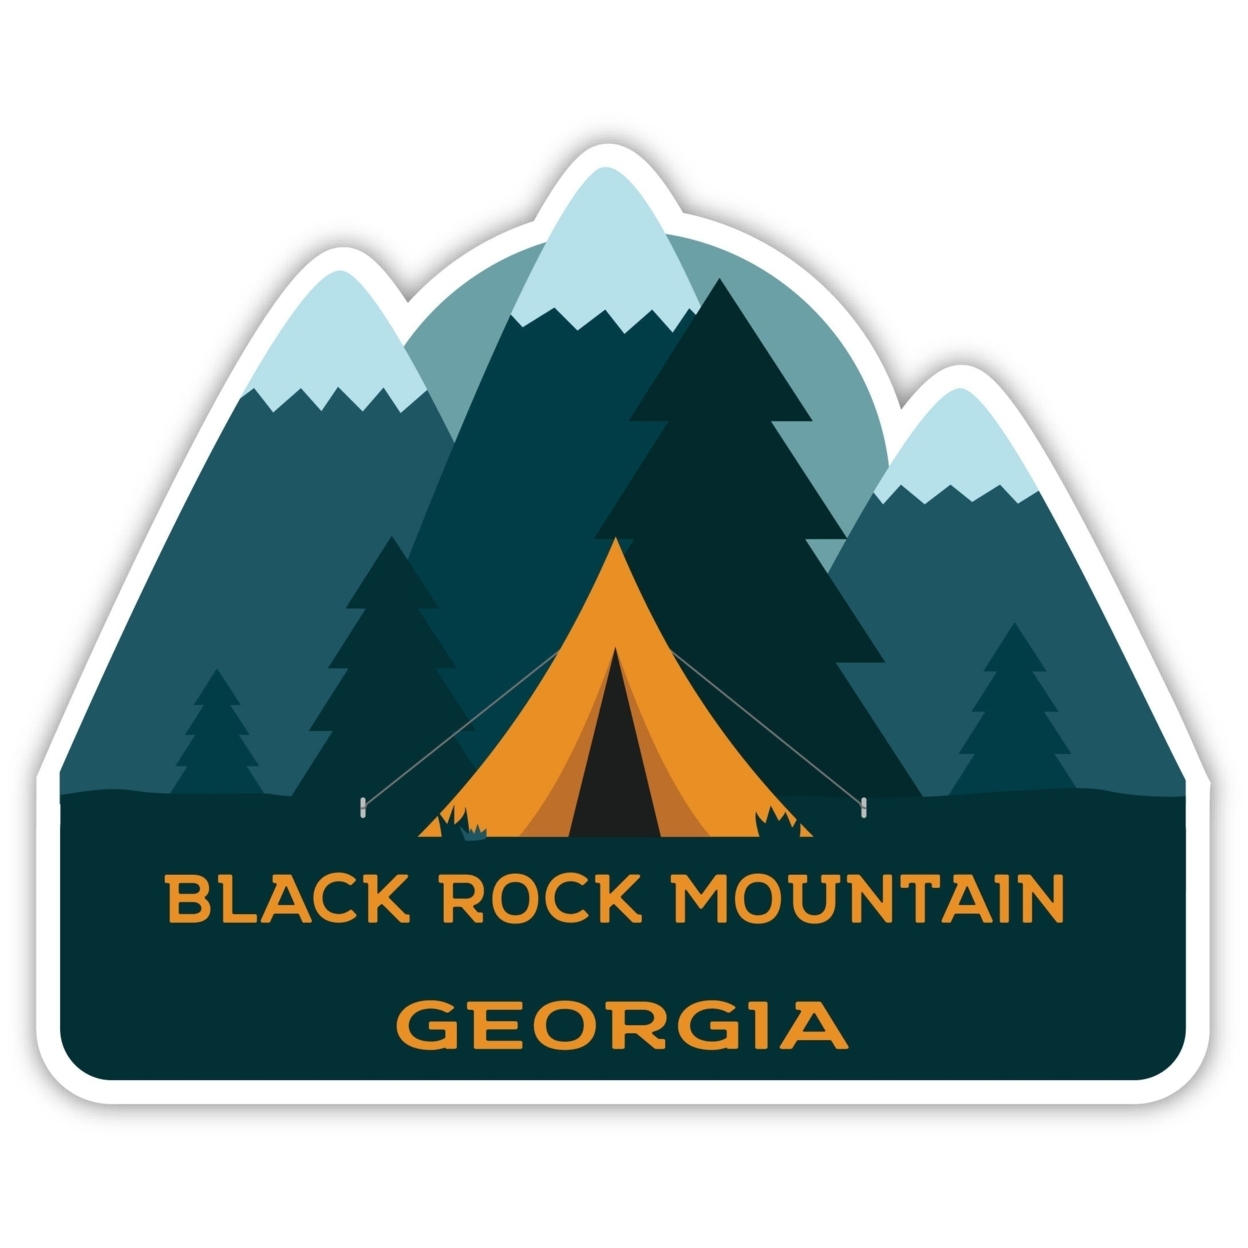 Black Rock Mountain Georgia Souvenir Decorative Stickers (Choose Theme And Size) - 4-Pack, 6-Inch, Tent